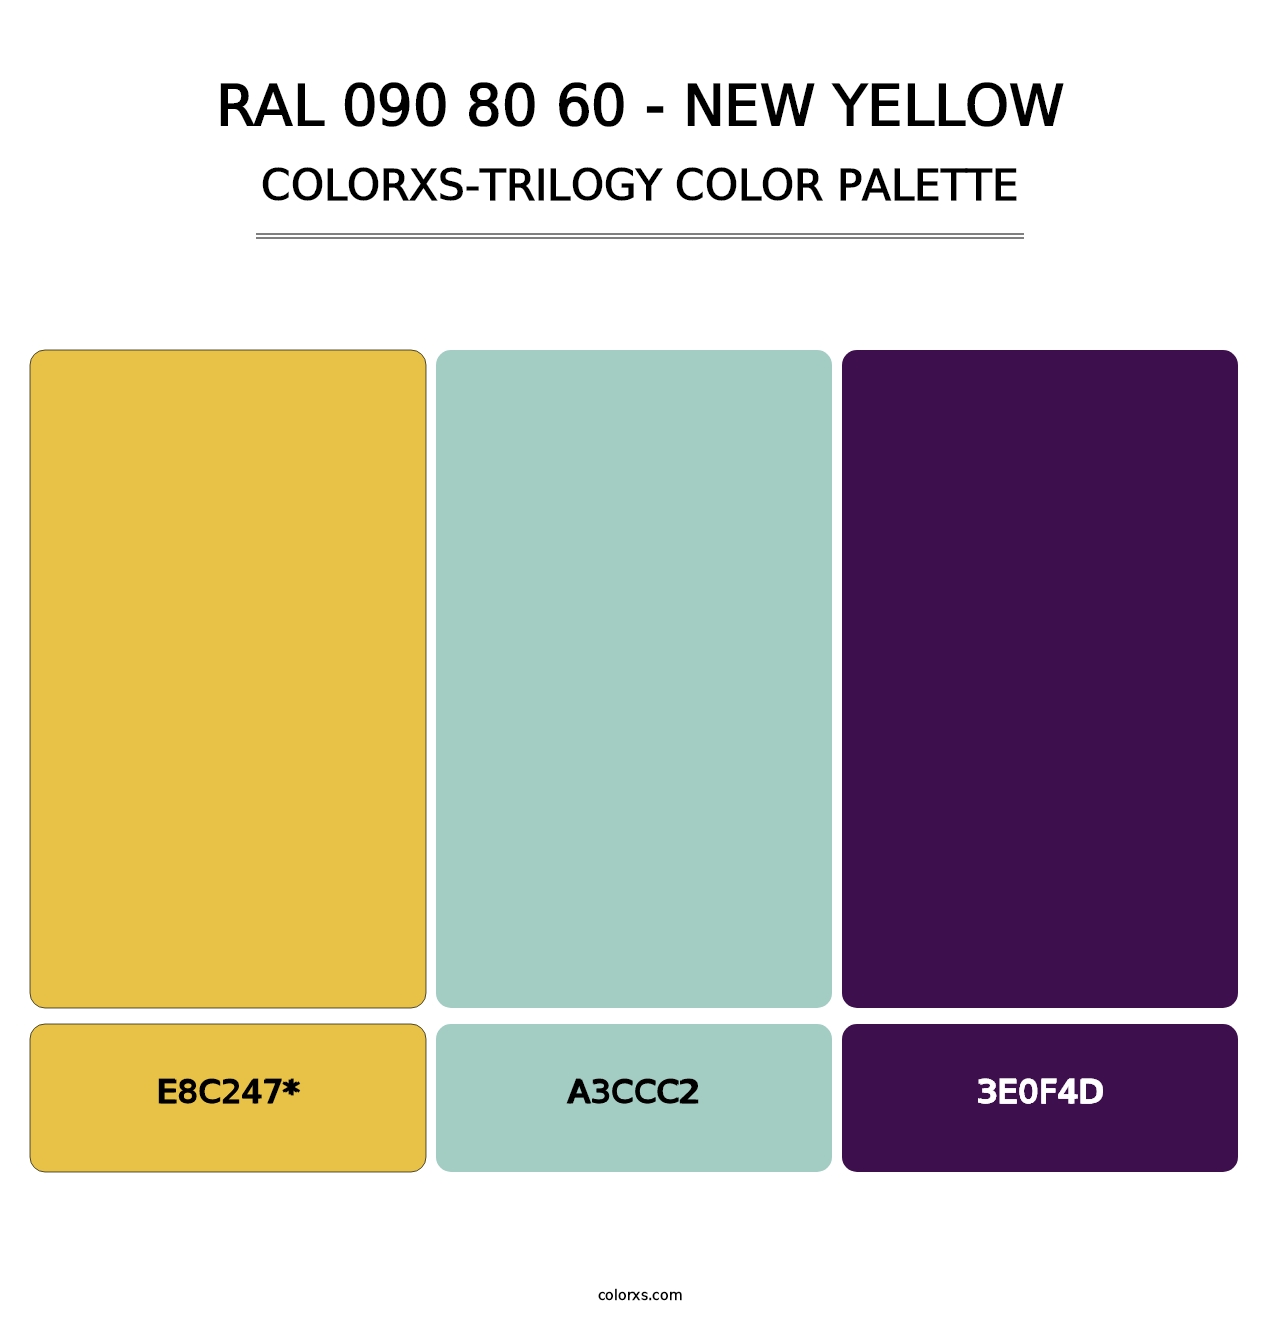 RAL 090 80 60 - New Yellow - Colorxs Trilogy Palette